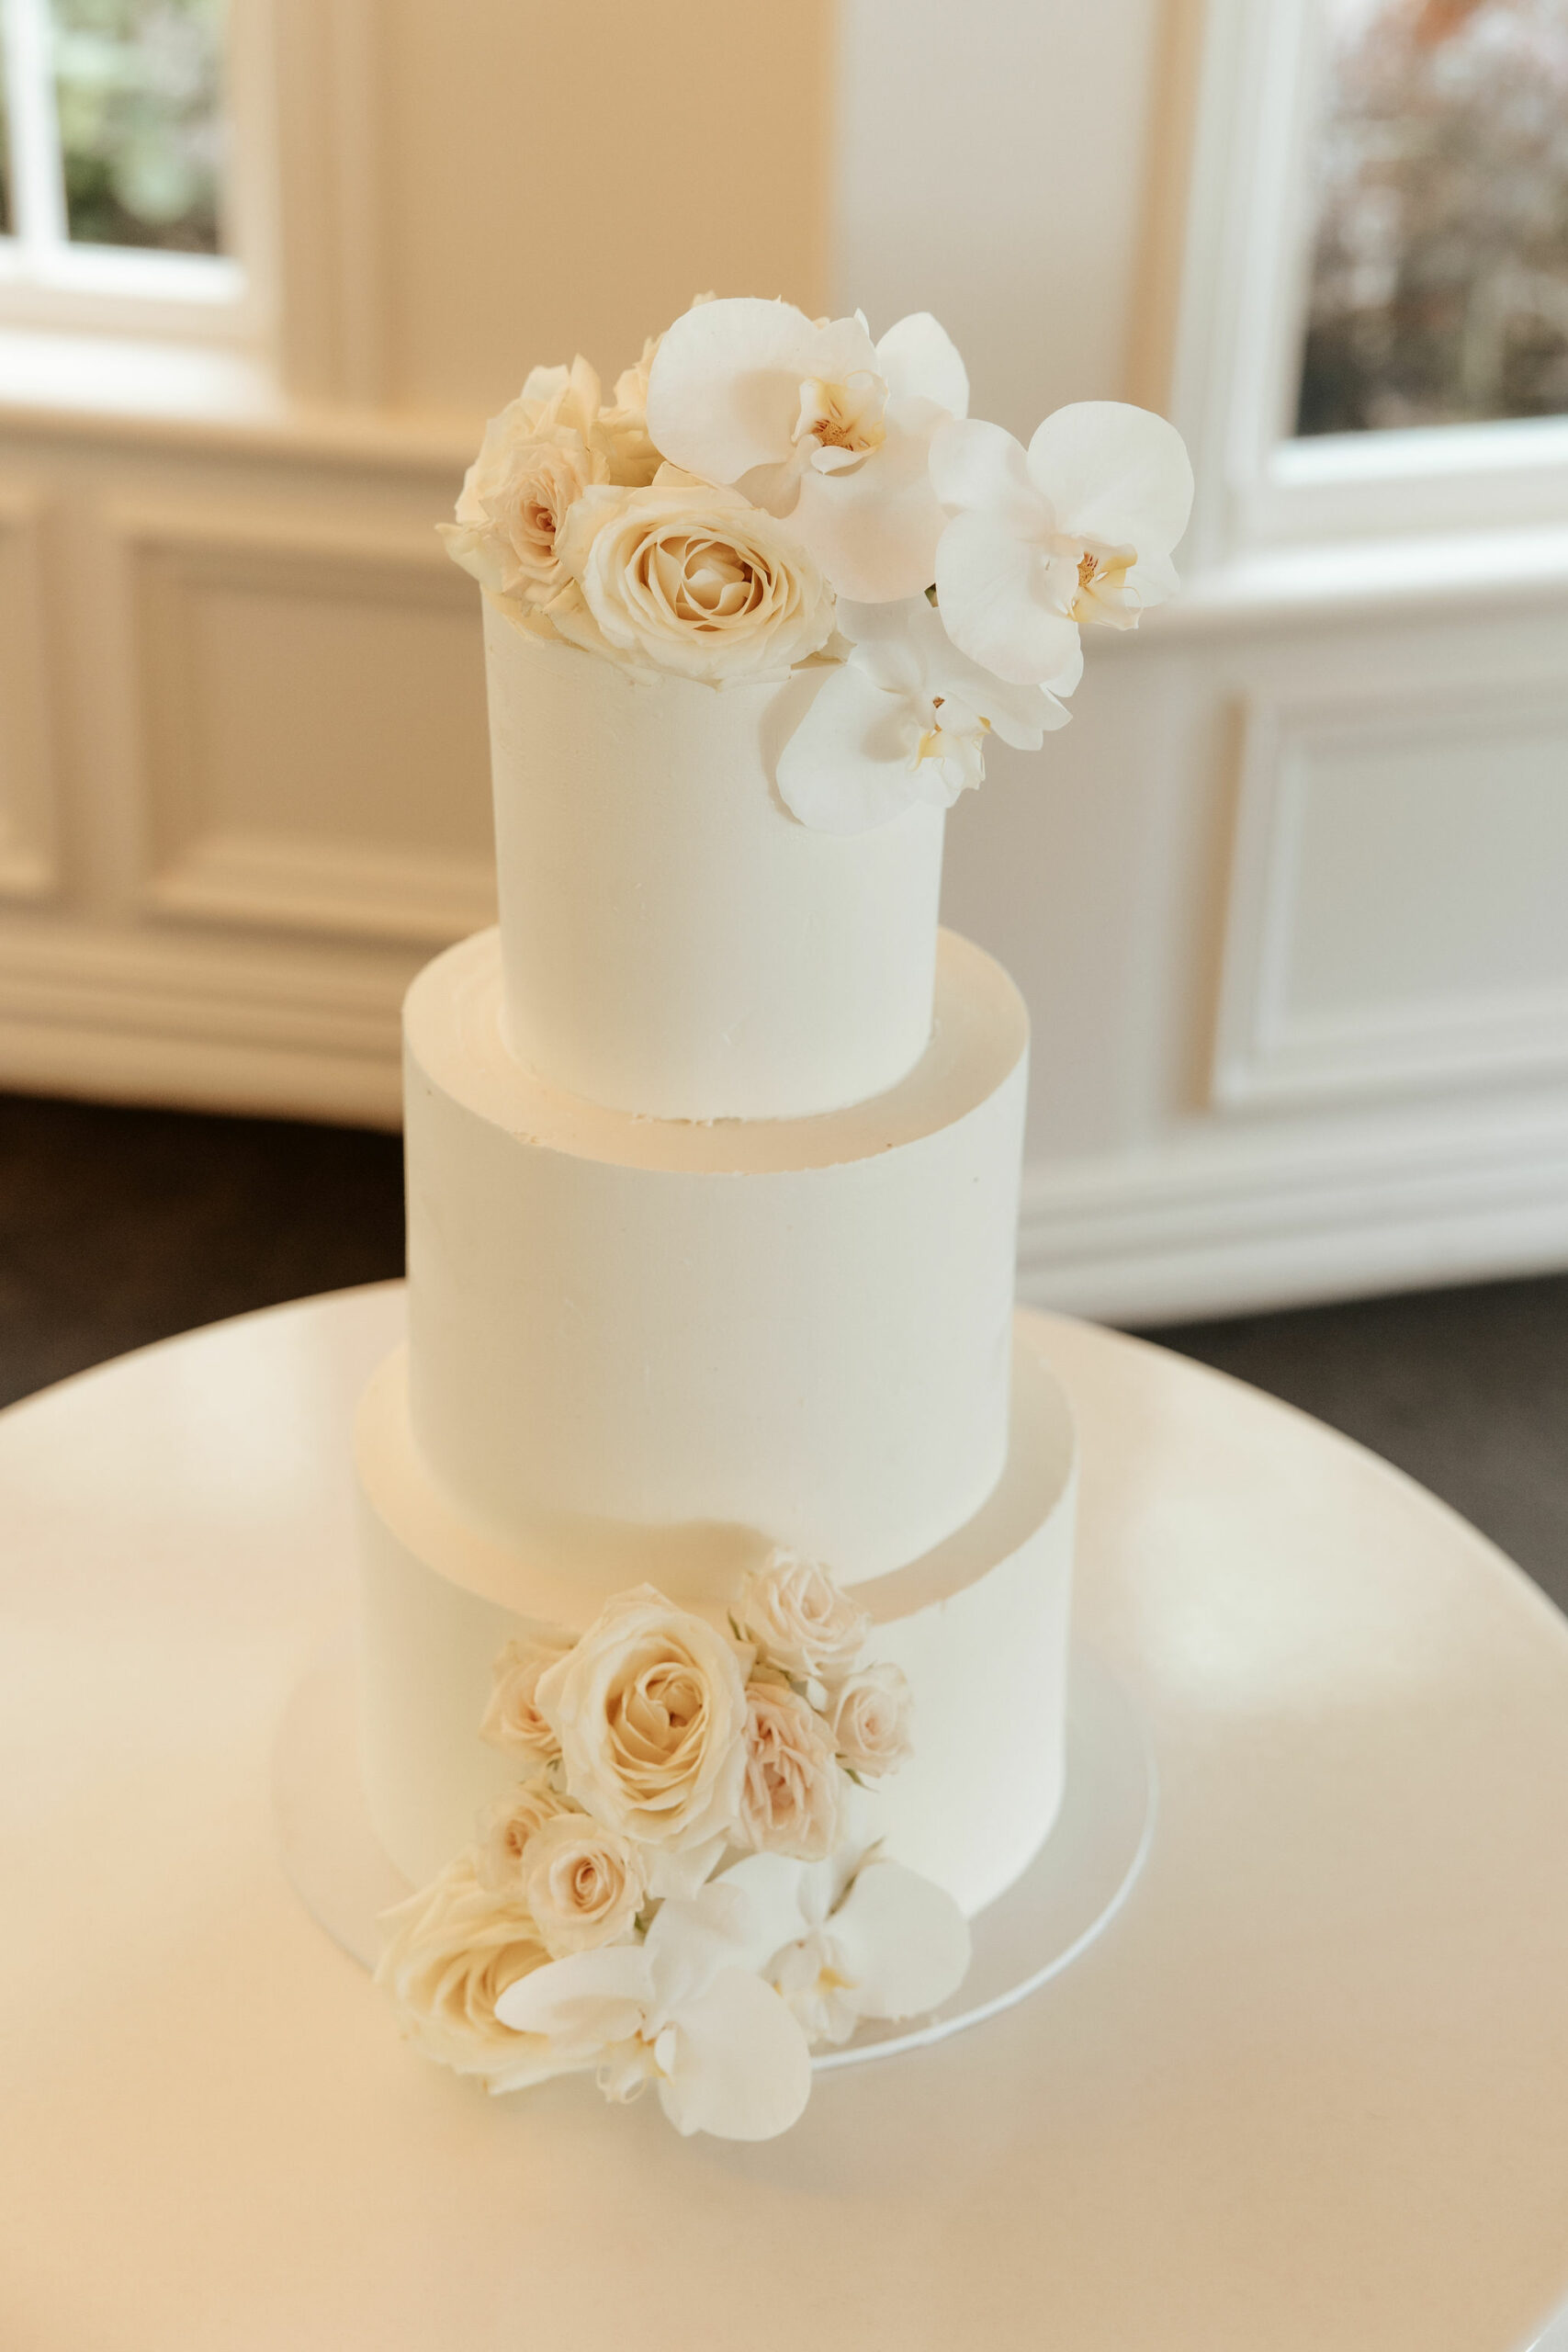 Three Tier Wedding Cake, Susanna Blatchford Photography, The Cake Eating Co, Christchurch